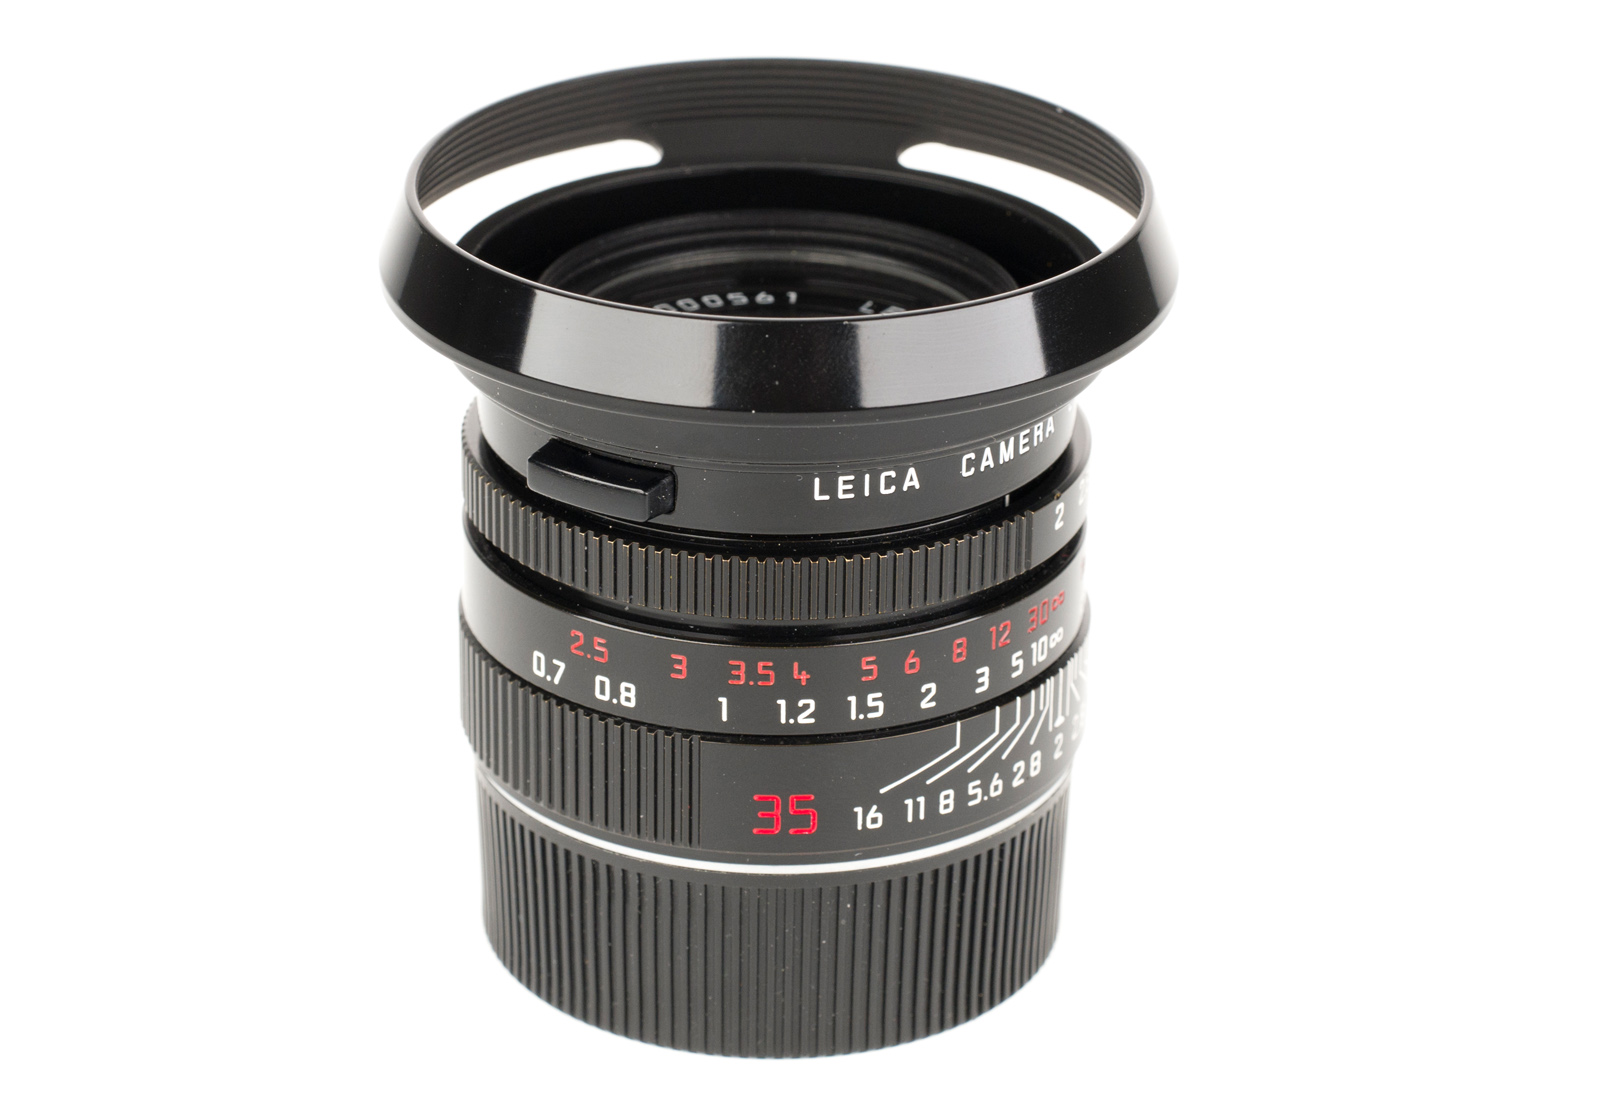 Leica Summicron-M 1:2/35mm ASPH., black paint 11611